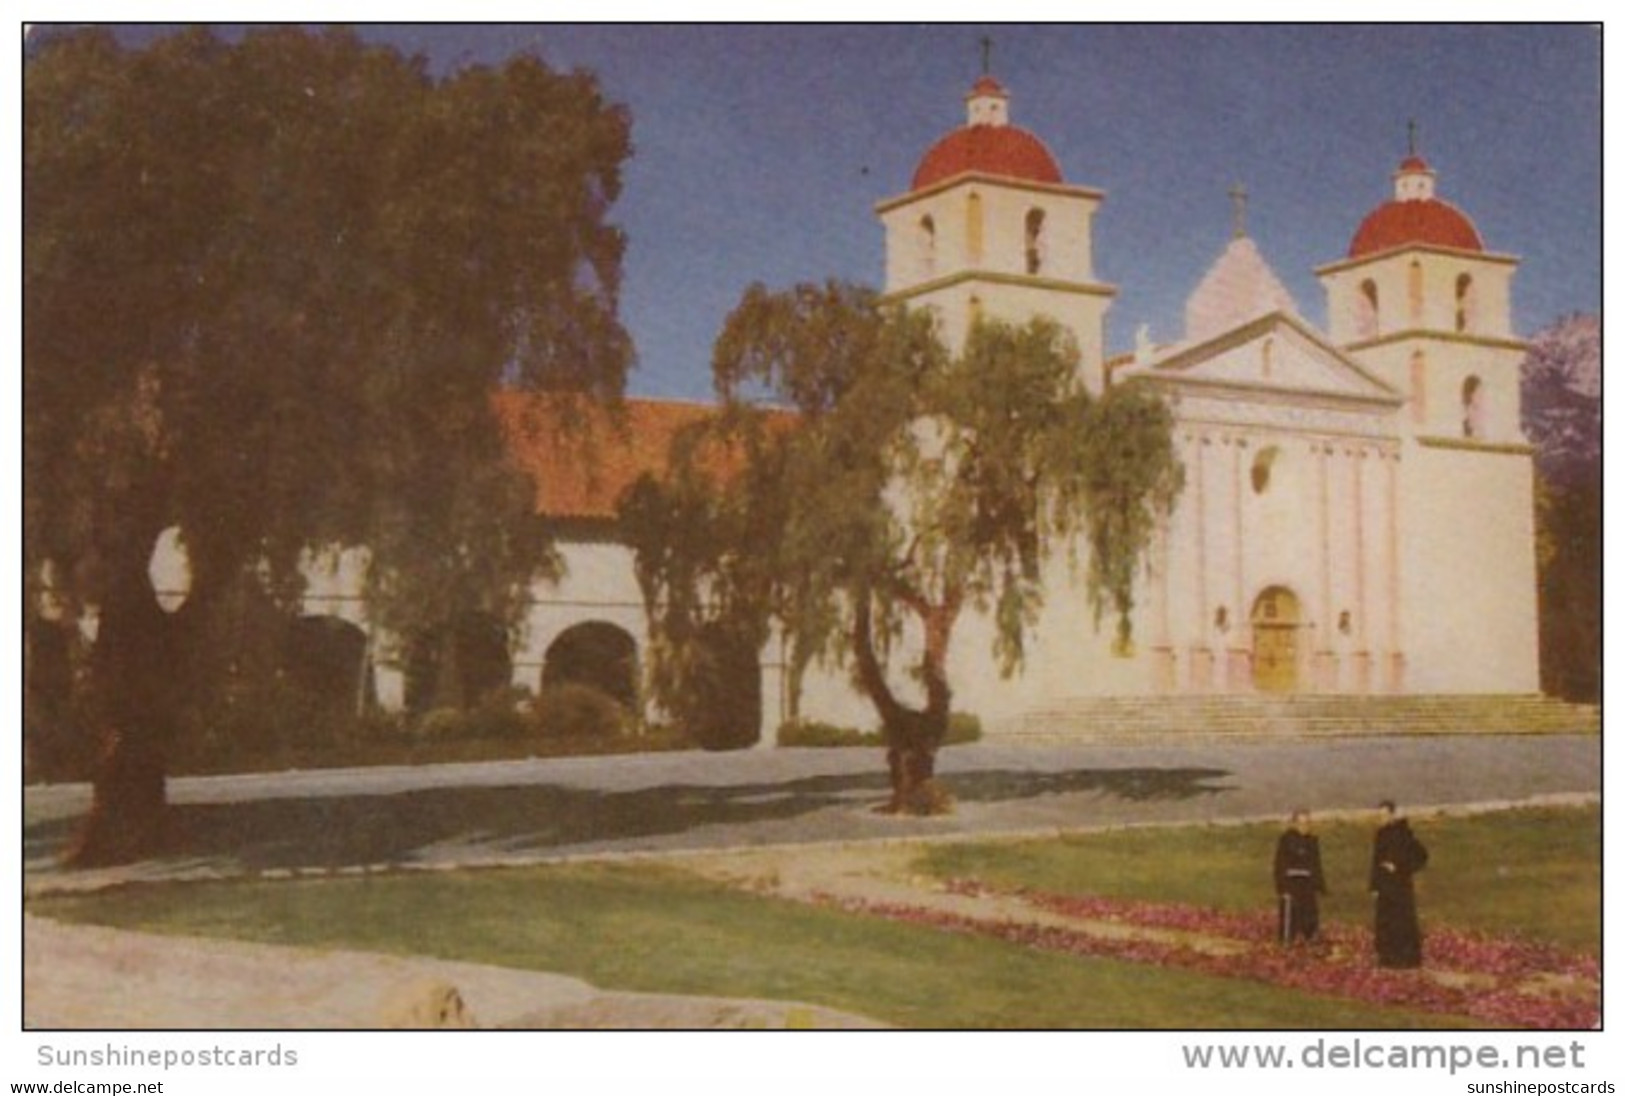 California Mission Santa Barbara Founded 1786 - Santa Barbara